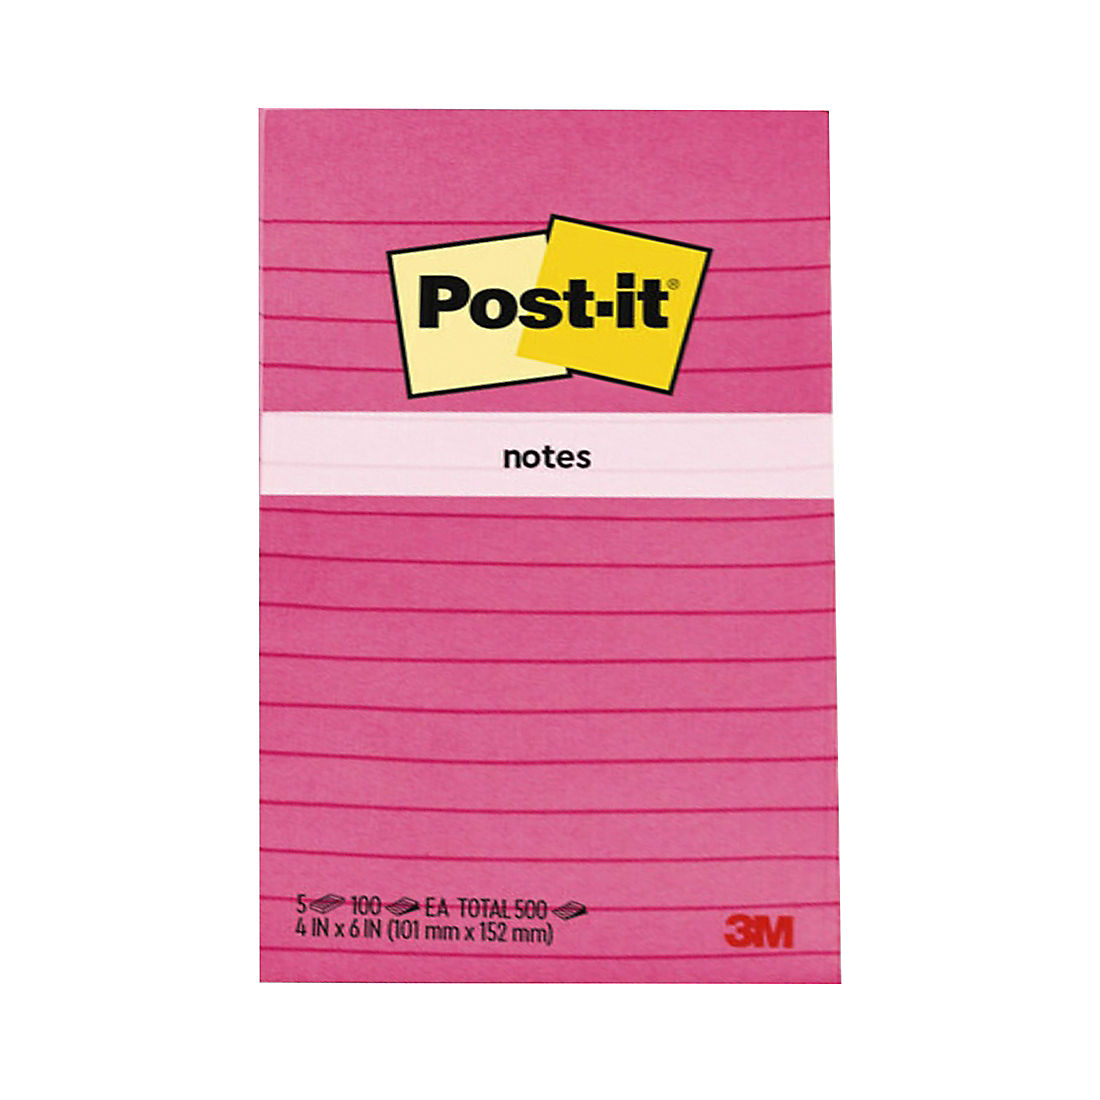 Post-it 4 x 6 Notes, 5 pk./100 ct. - Pastel